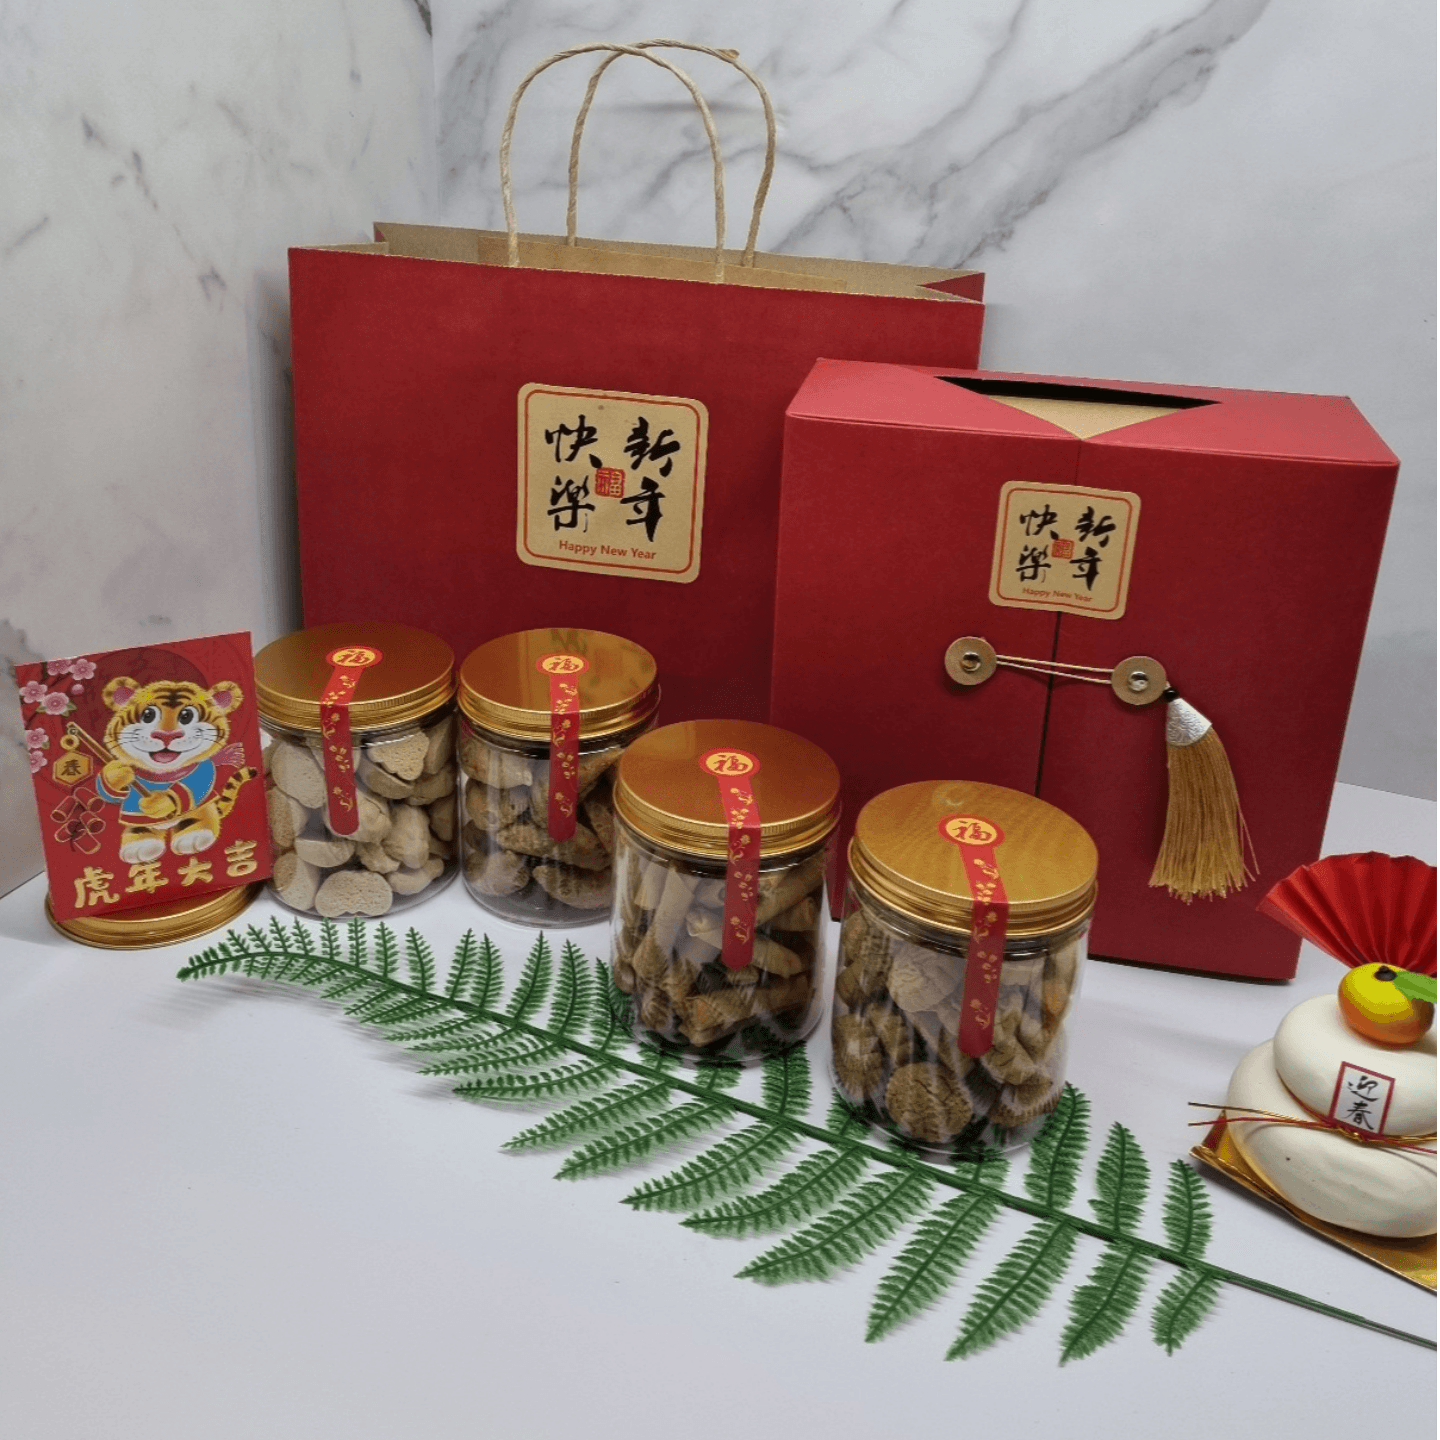 2022 CNY Premium Gift Box - Classic CNY Box 4 Bottles with Gift Box & Bag